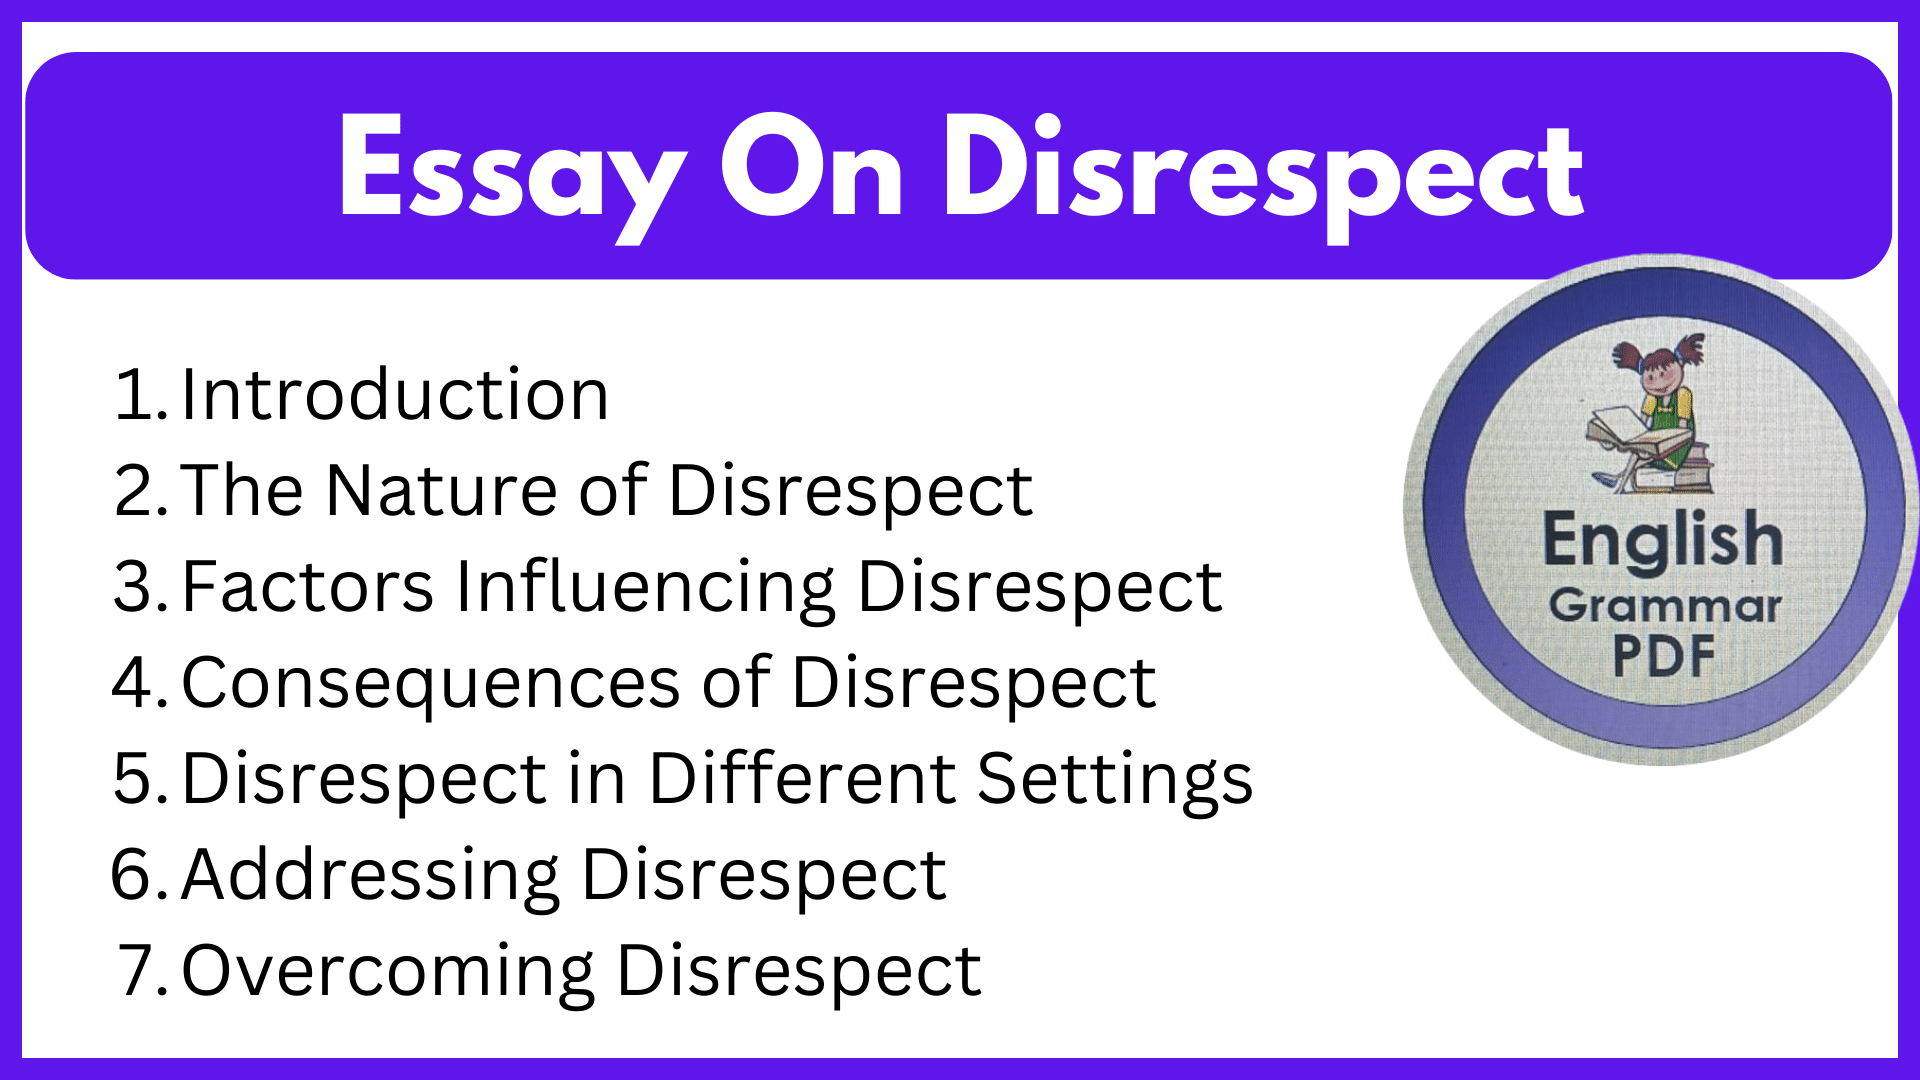 Essay On Disrespect